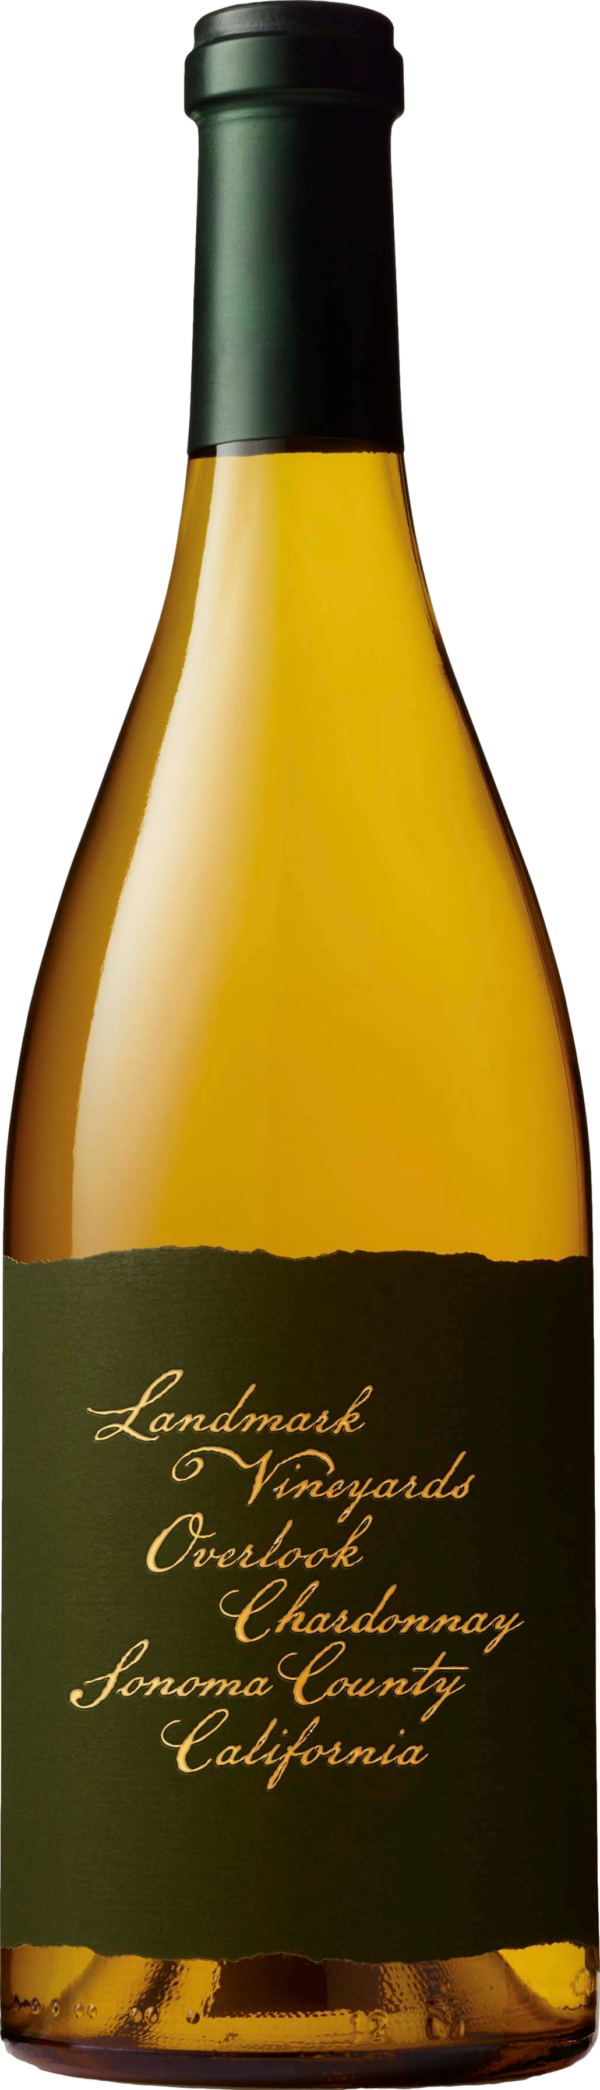 Product image of Landmark Vineyards Overlook Chardonnay 2019 from 8wines